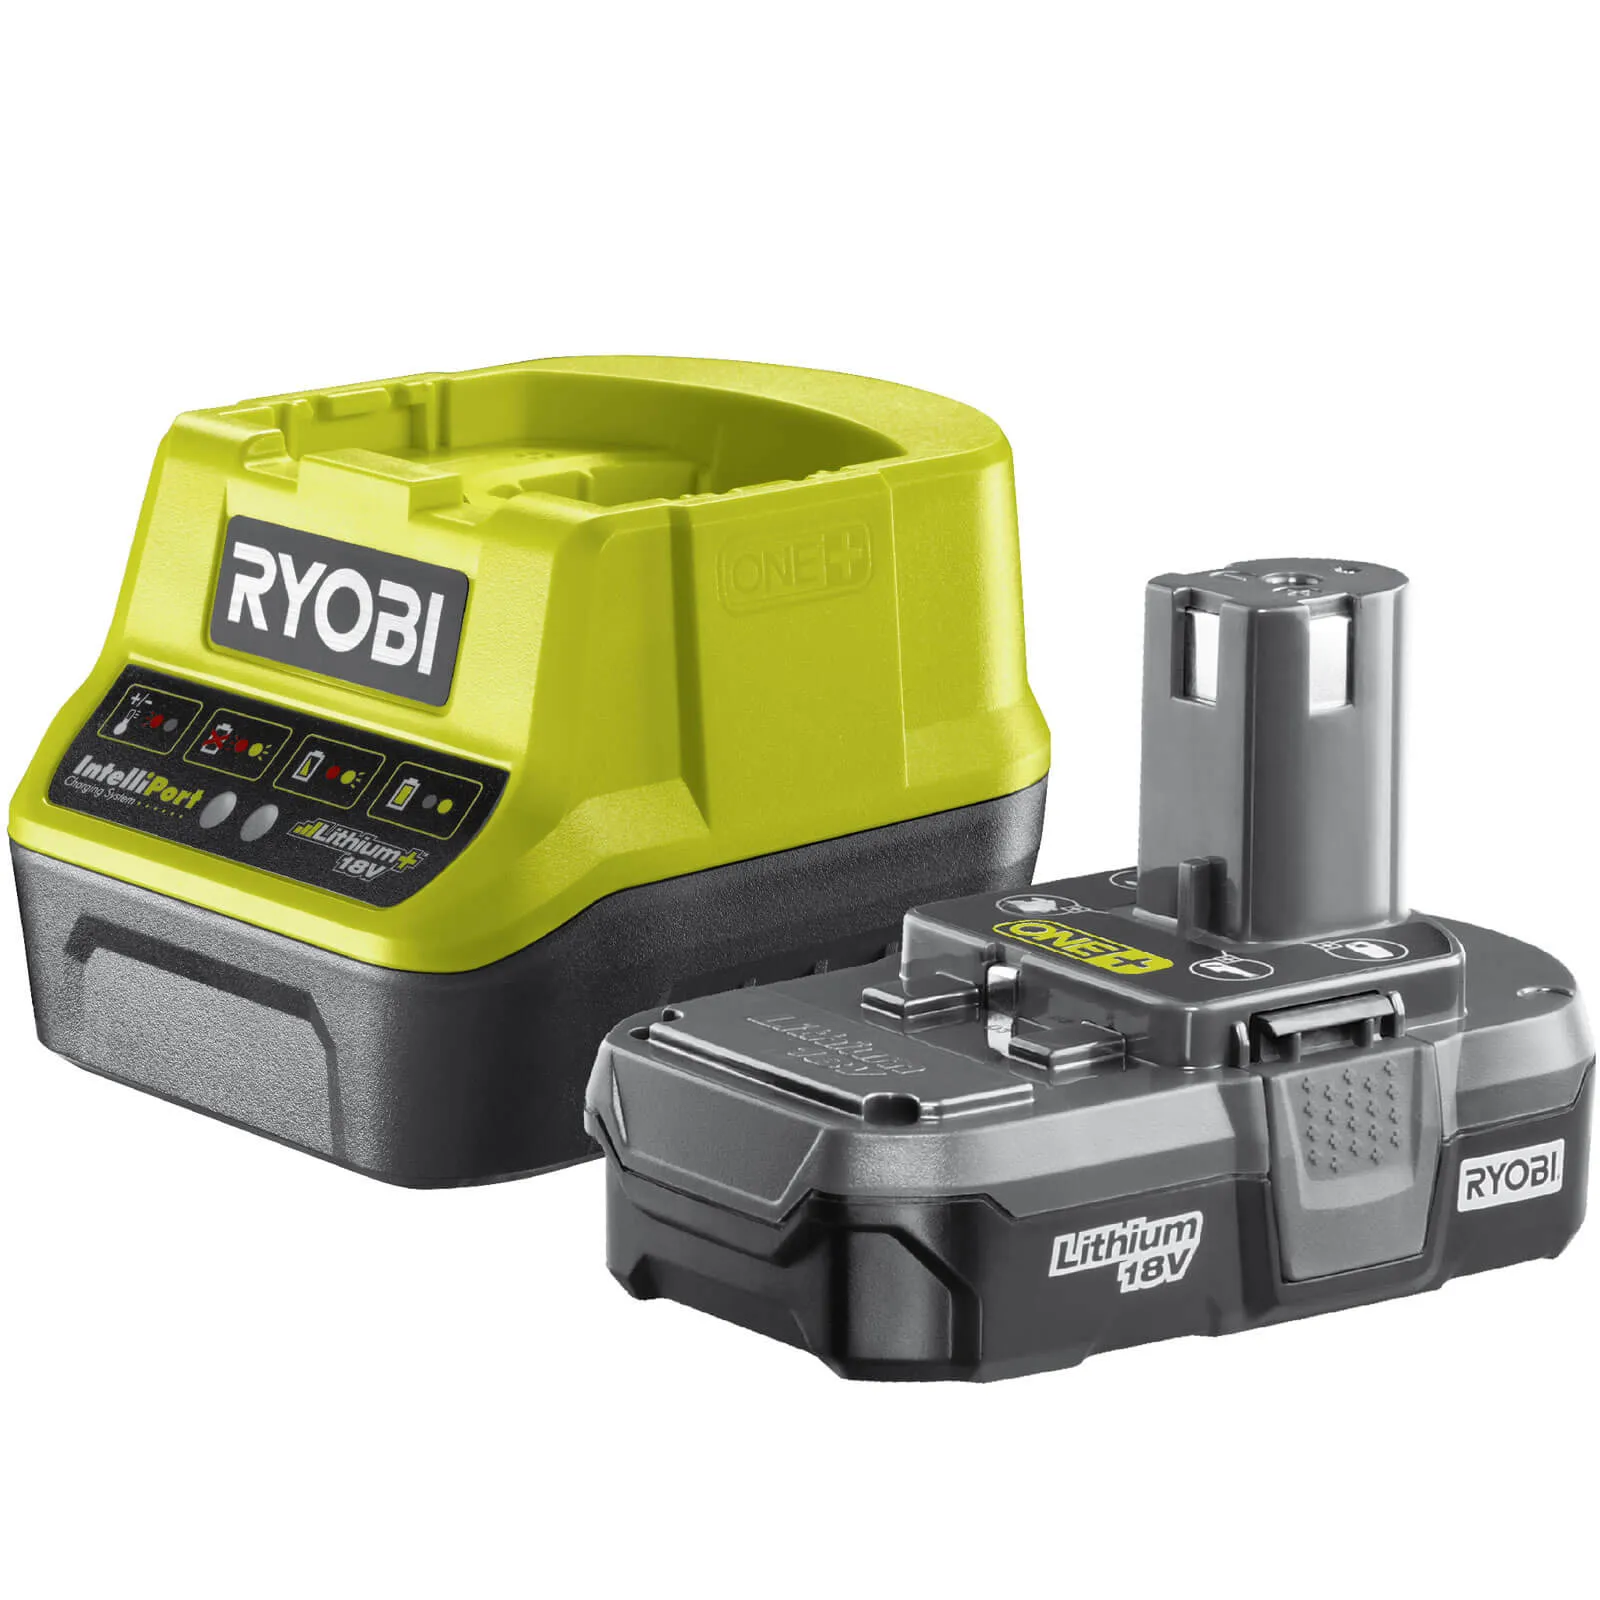 Ryobi RC18120-120 ONE+ 18v Cordless Fast Battery Charger and Li-ion Battery 2ah - 240v